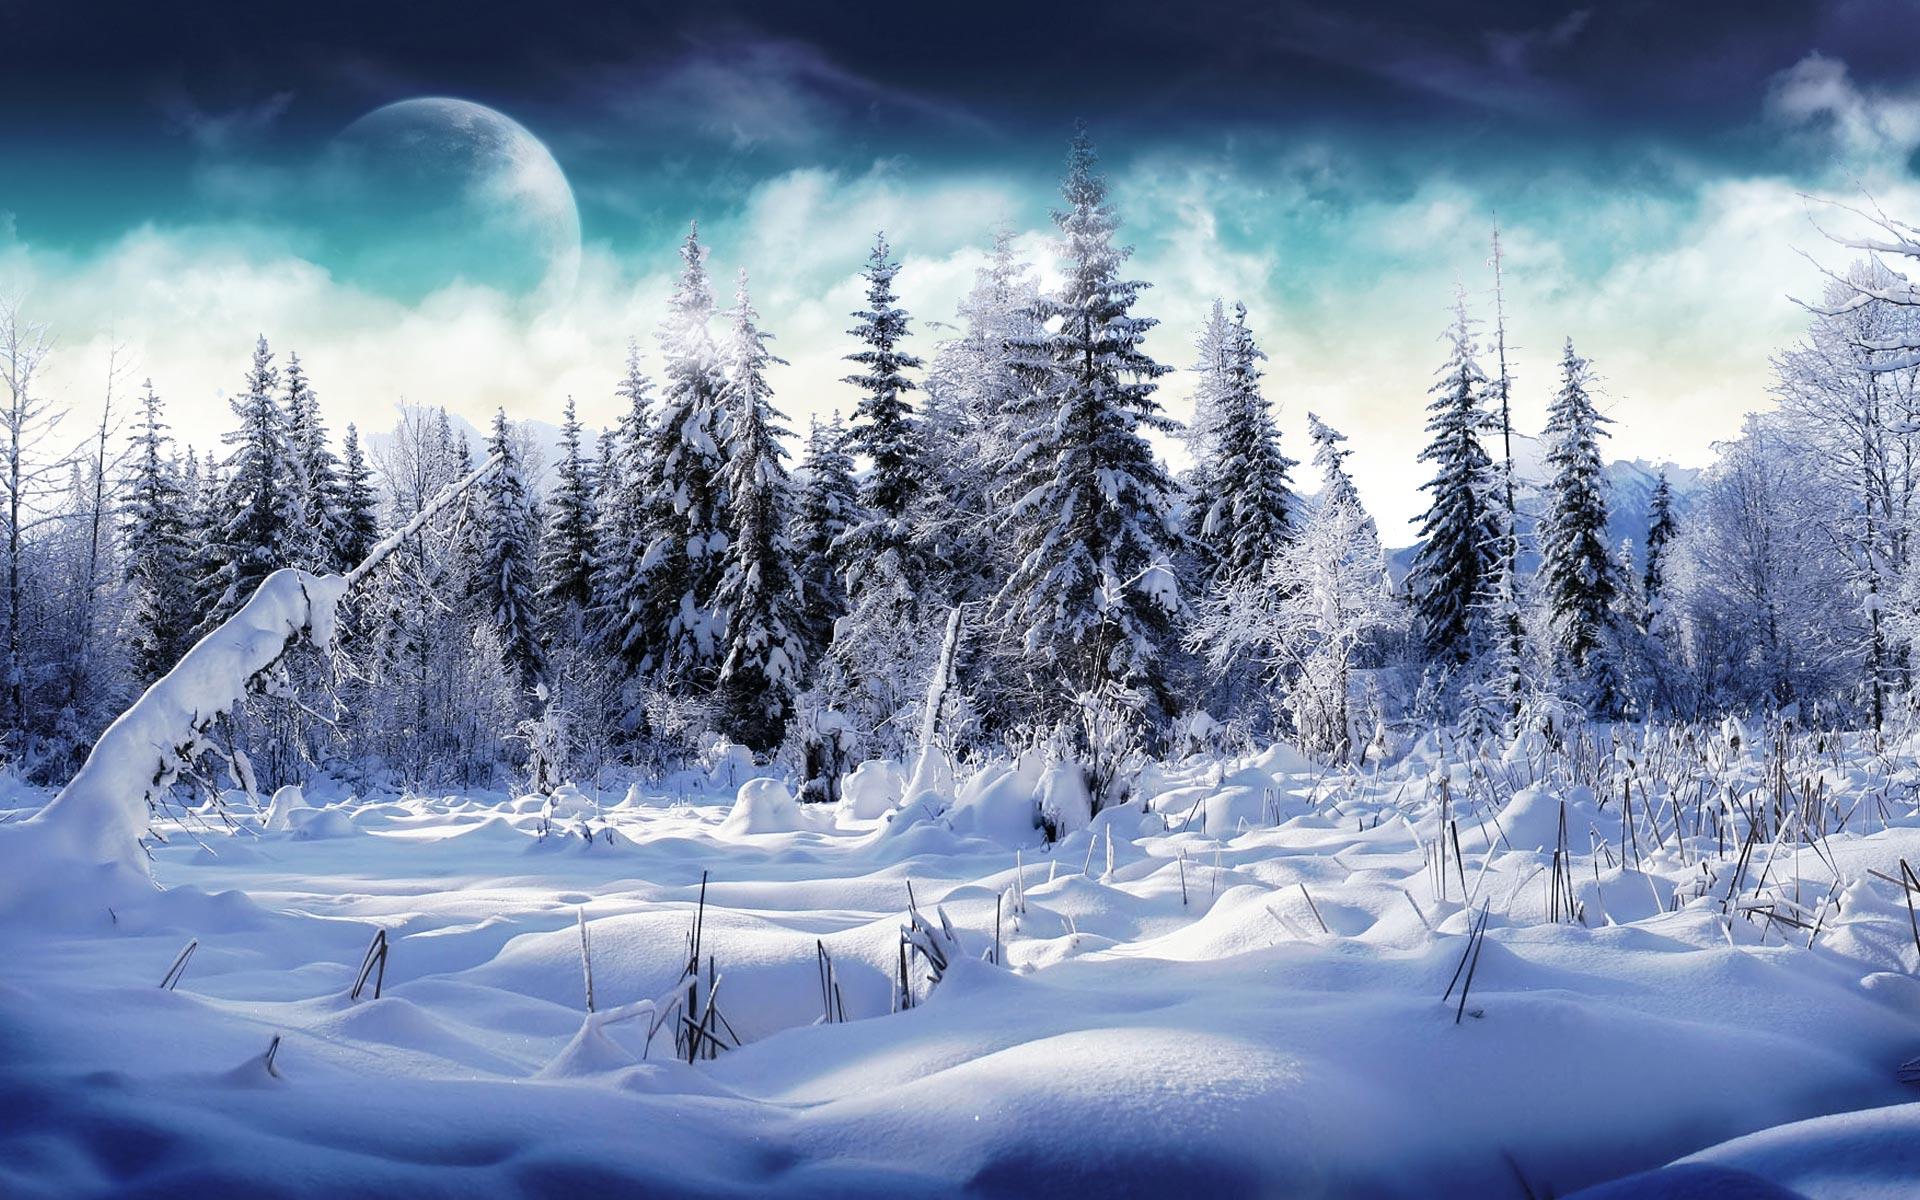 Desktop Wallpaper · Gallery · Nature · Winter Snowy forest. Free